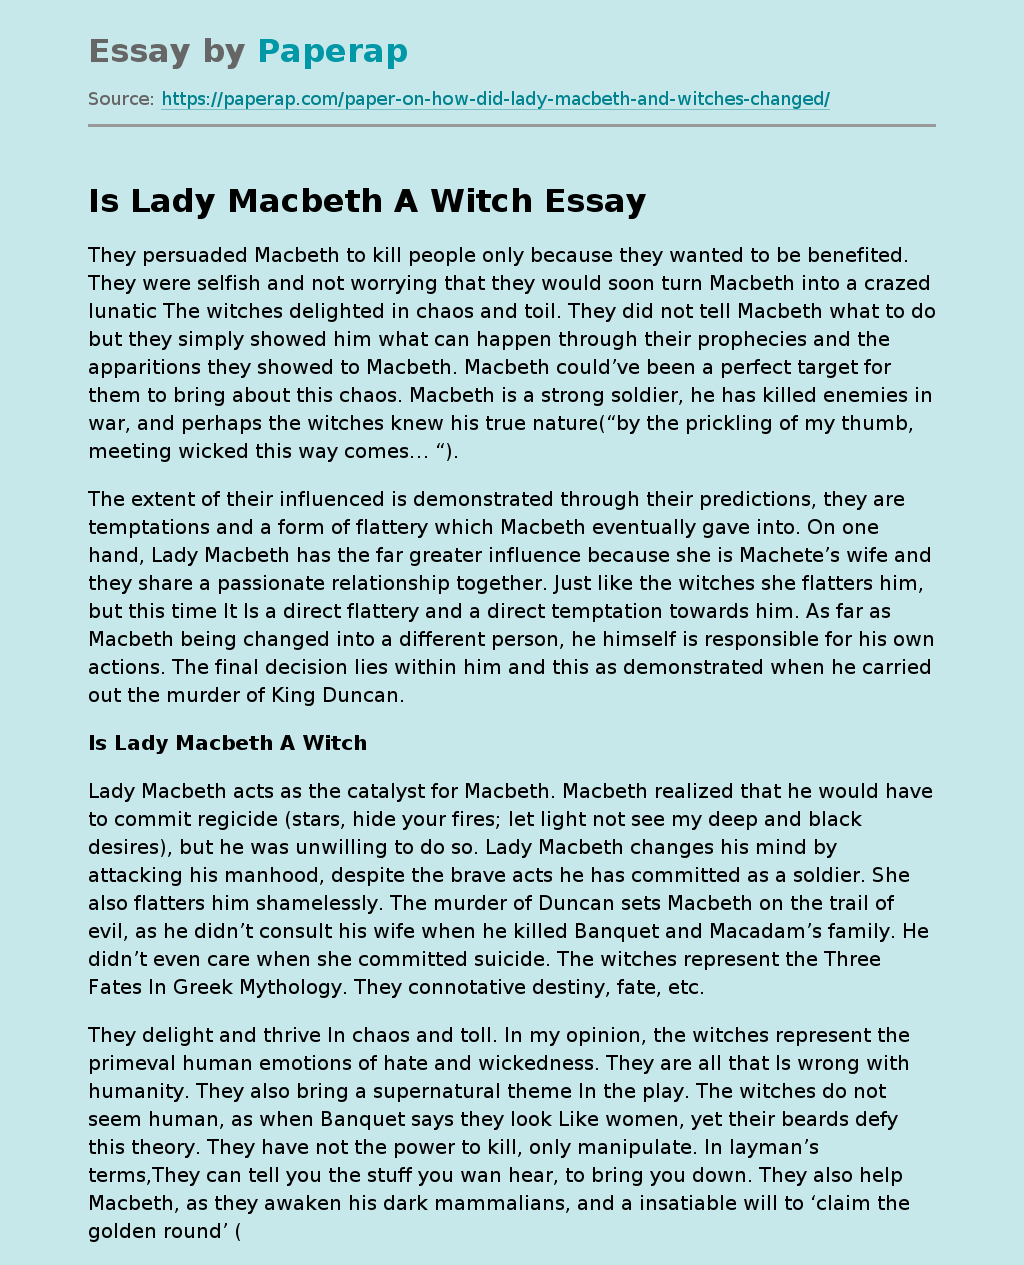 Is Lady Macbeth A Witch